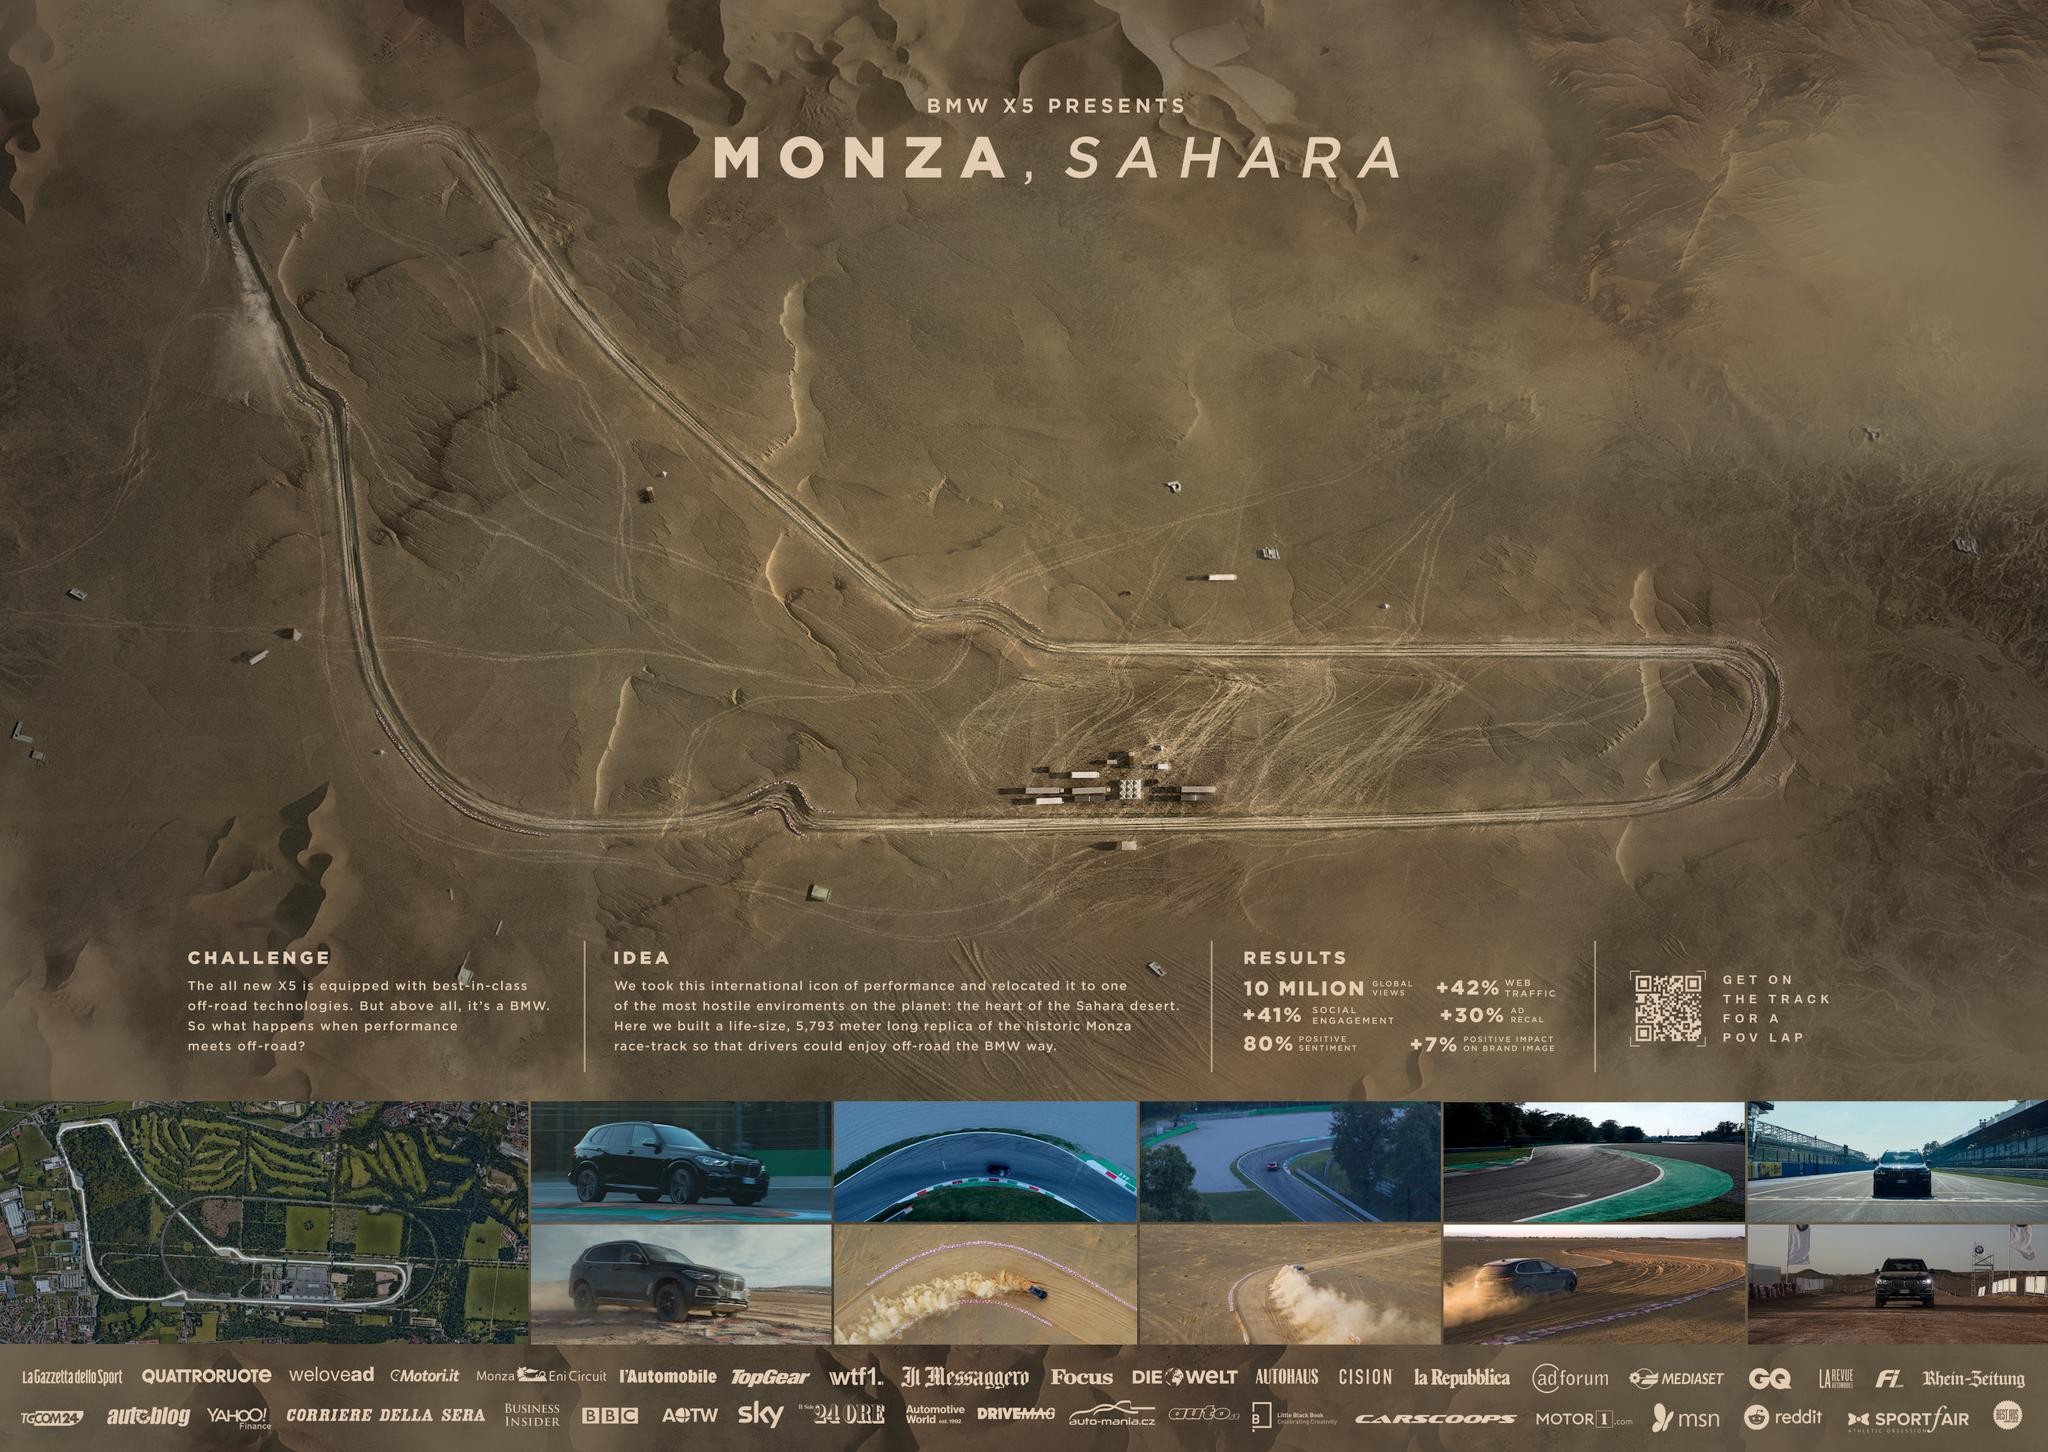 The New BMW X5 Monza,Sahara